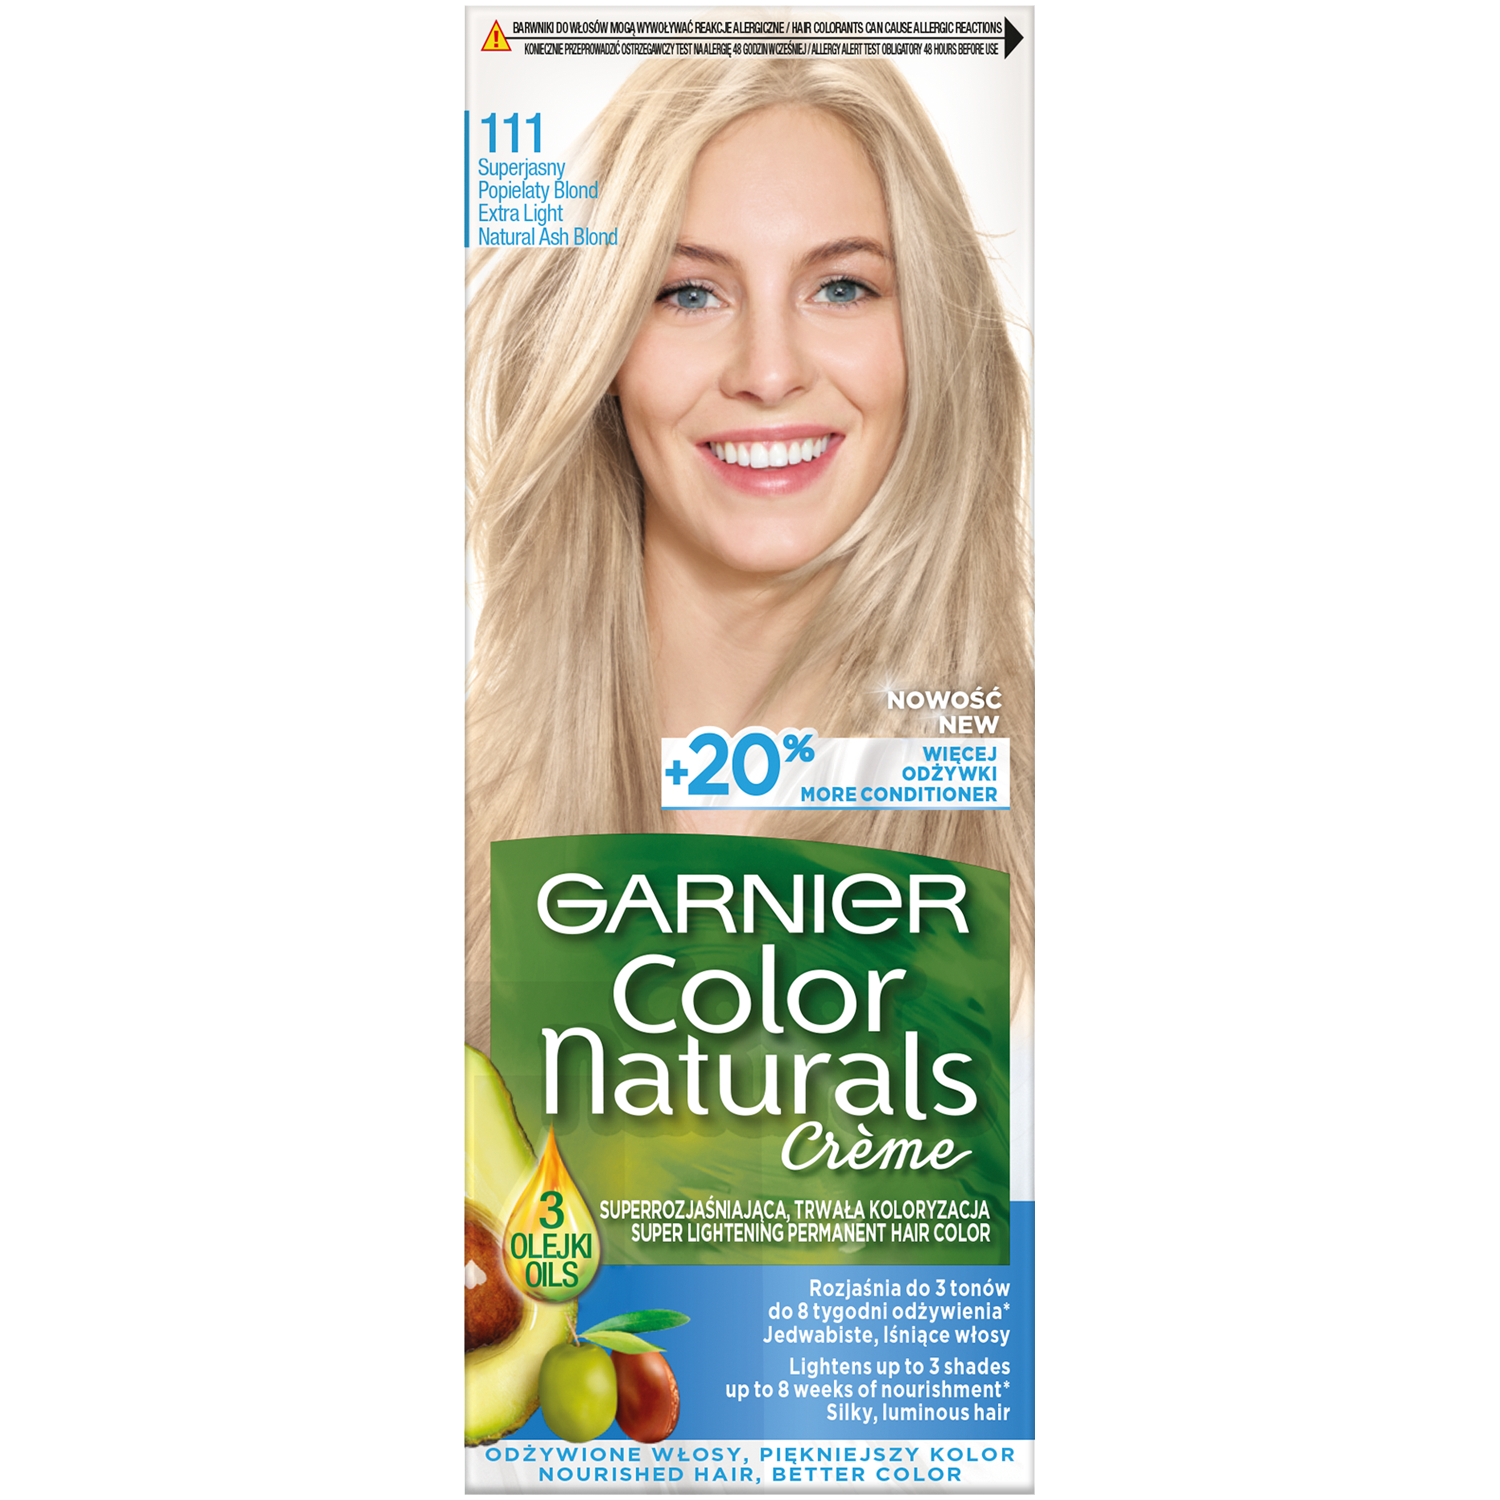 Garnier farba do włosów 111 super jasny popielaty blond Color Naturals  Créme | hebe.pl